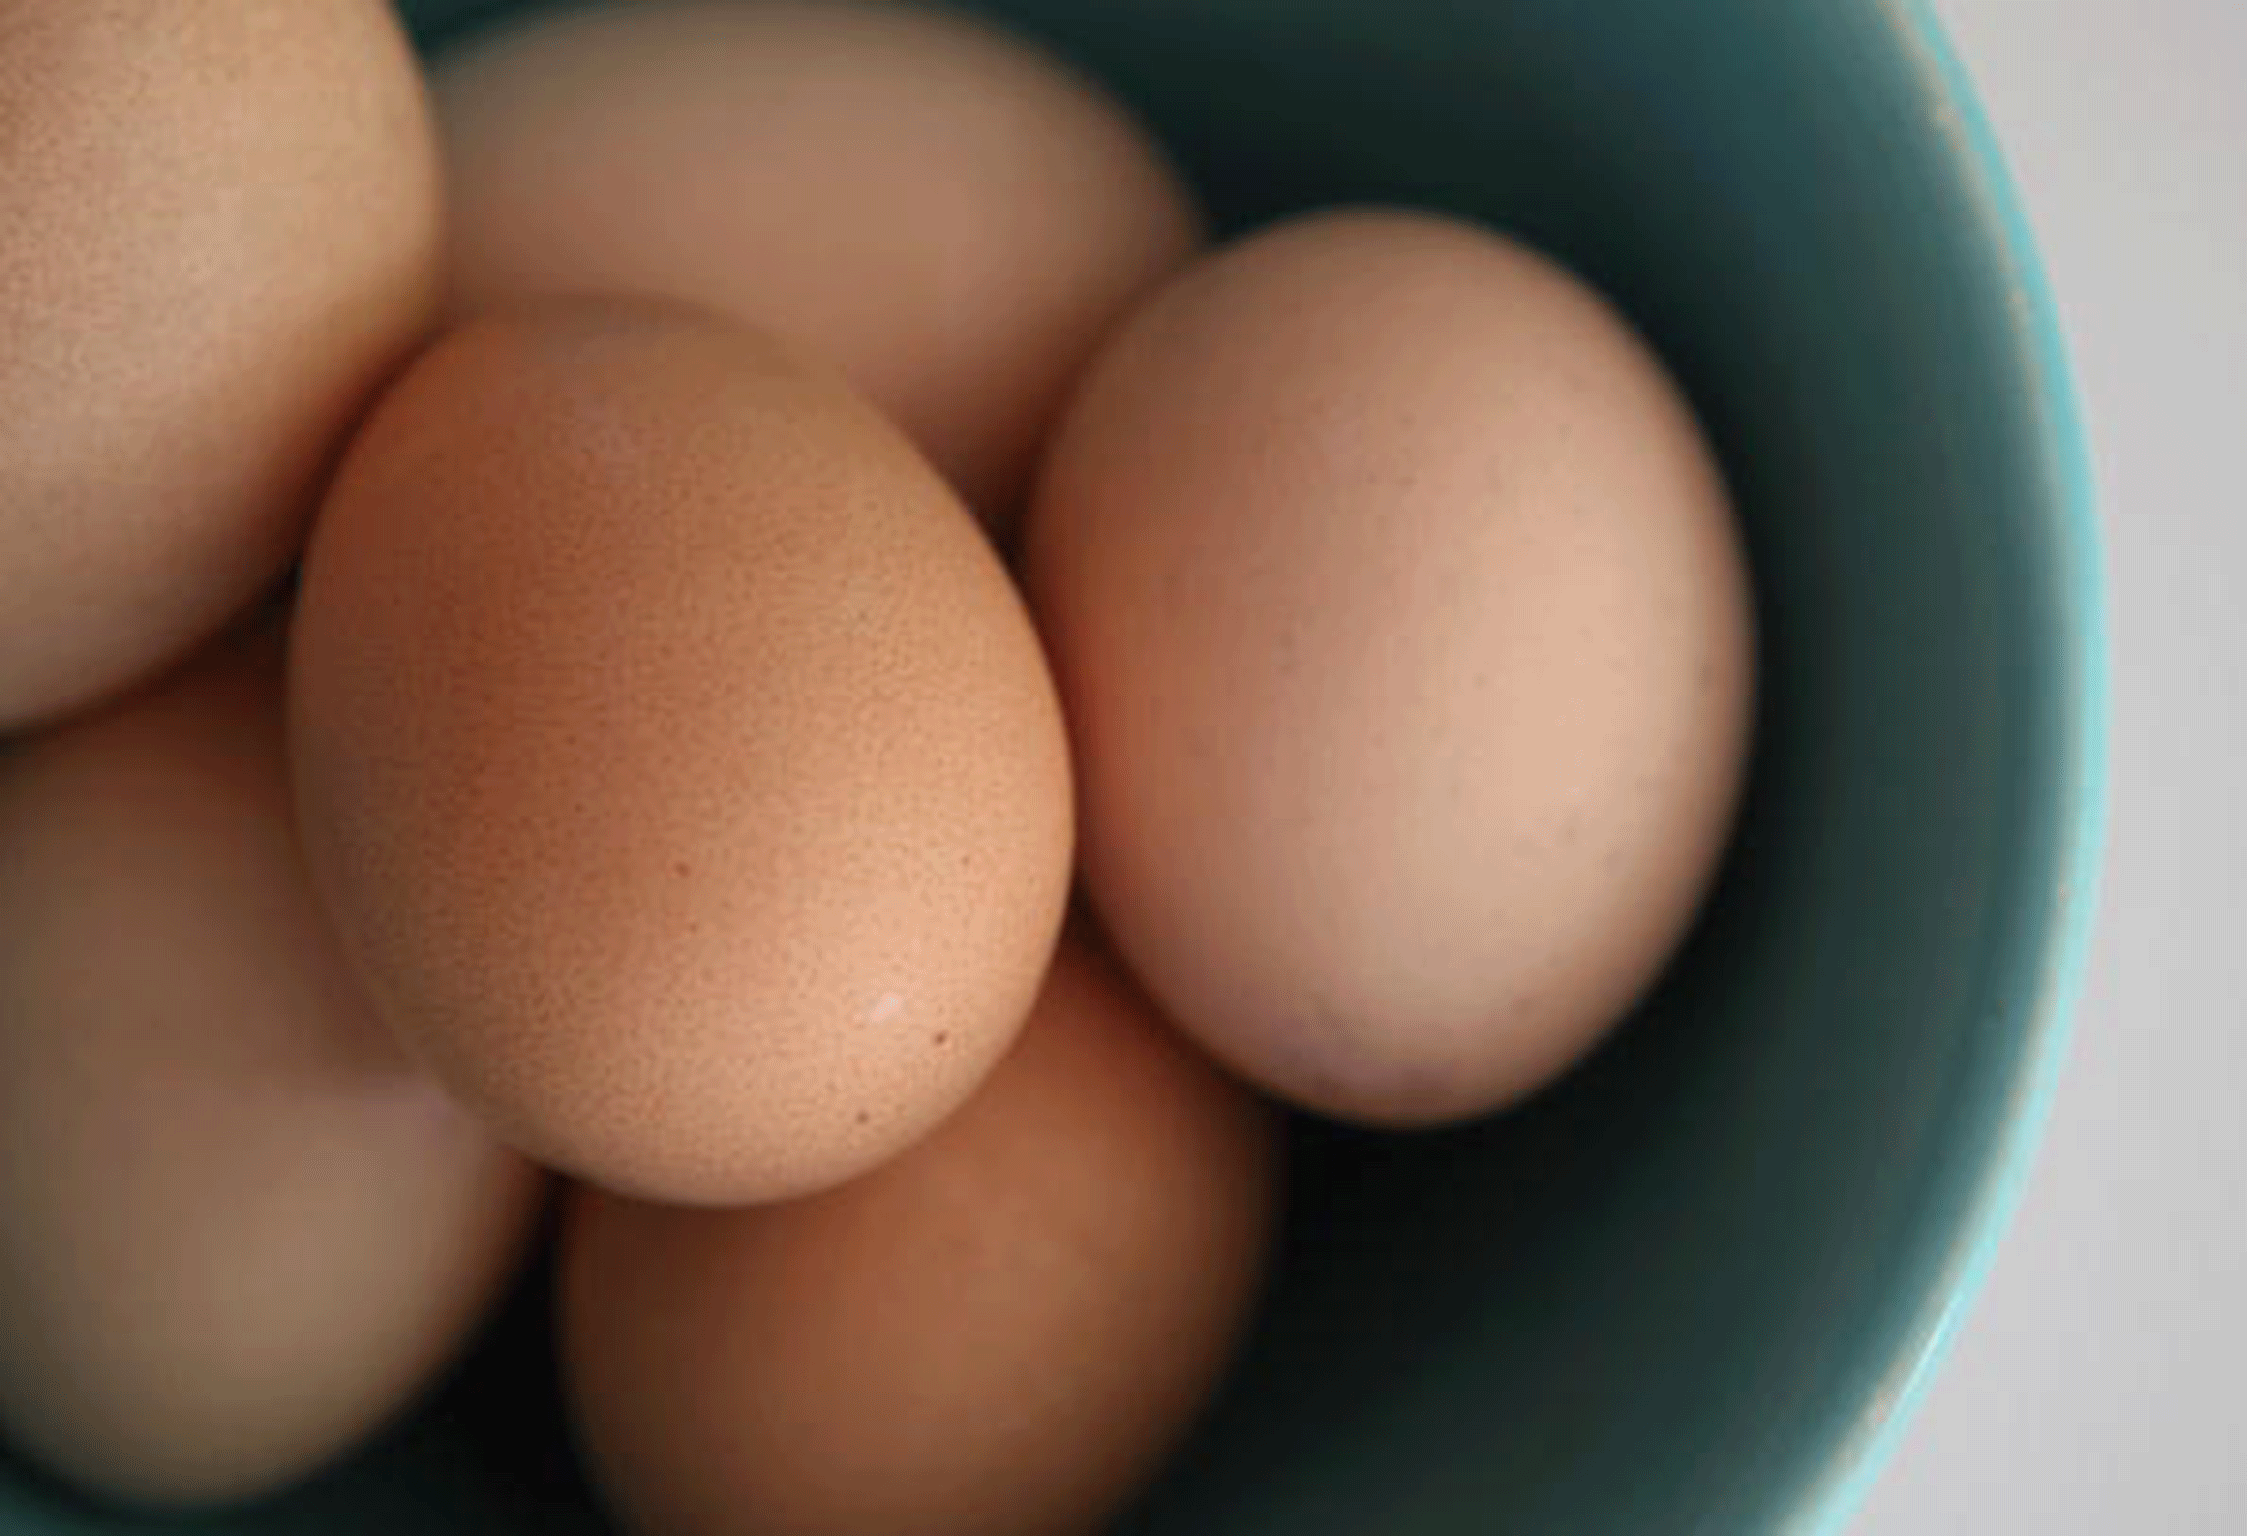 Four eggs a week lowers diabetes risk